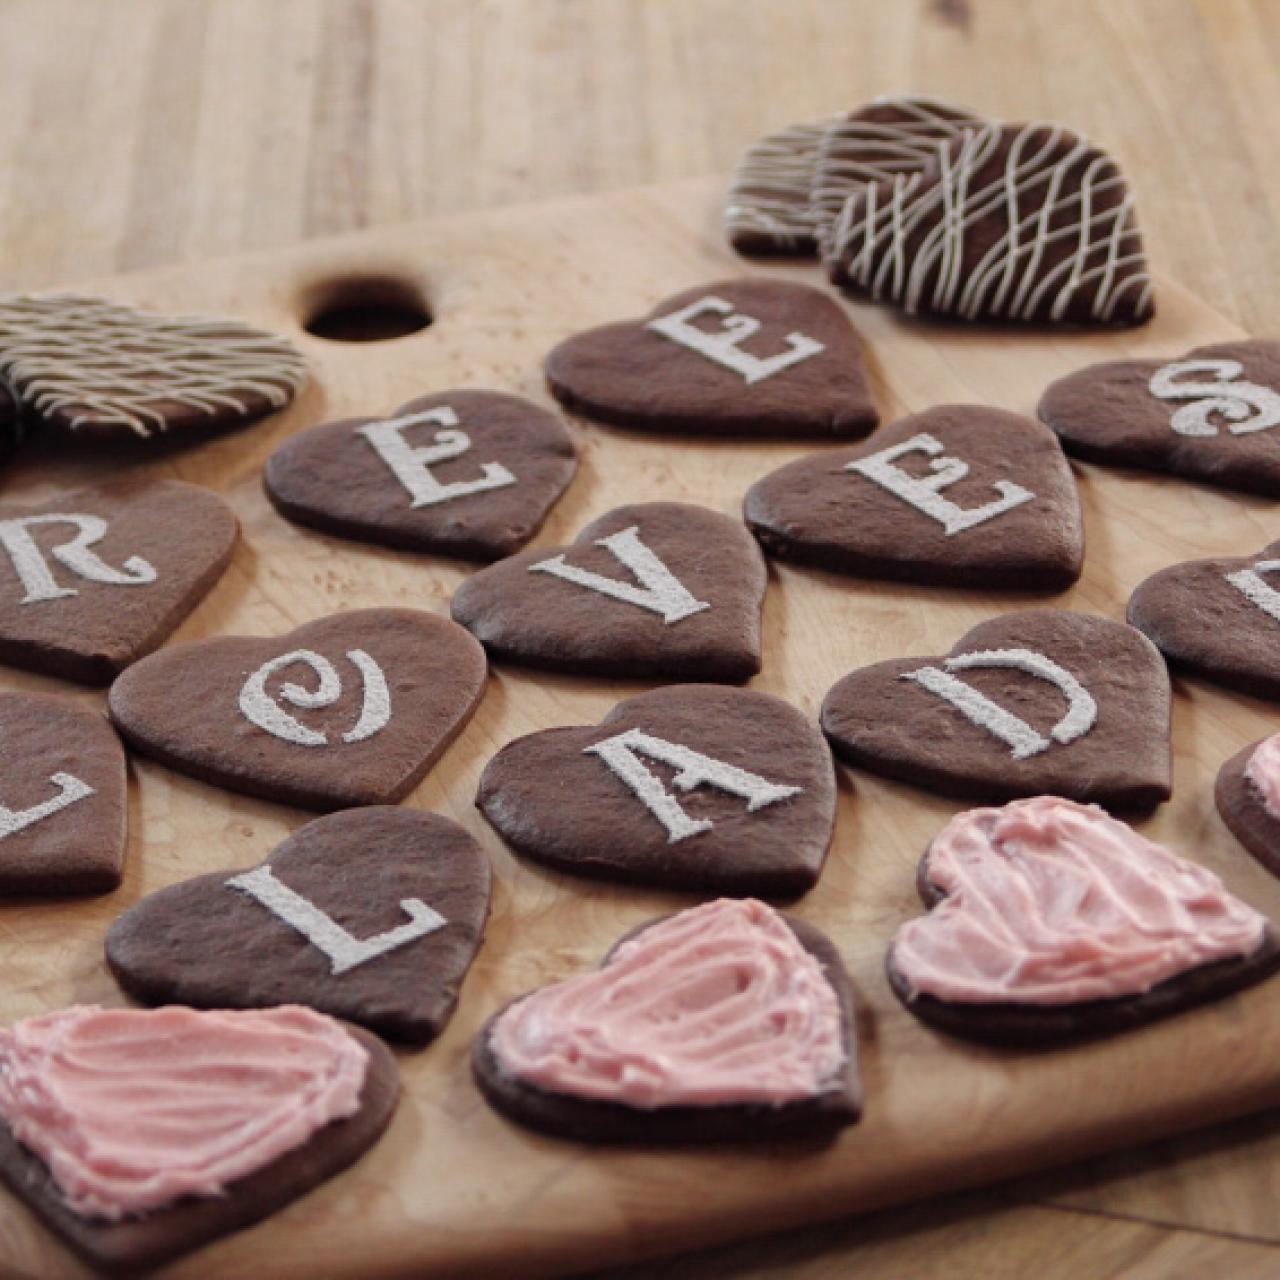 Double Heart Stencil - Valentines Day Stencils - Stencils for Cookies -  Cookie Decorating Stencils - Cake Decorating Stencils - Stencils